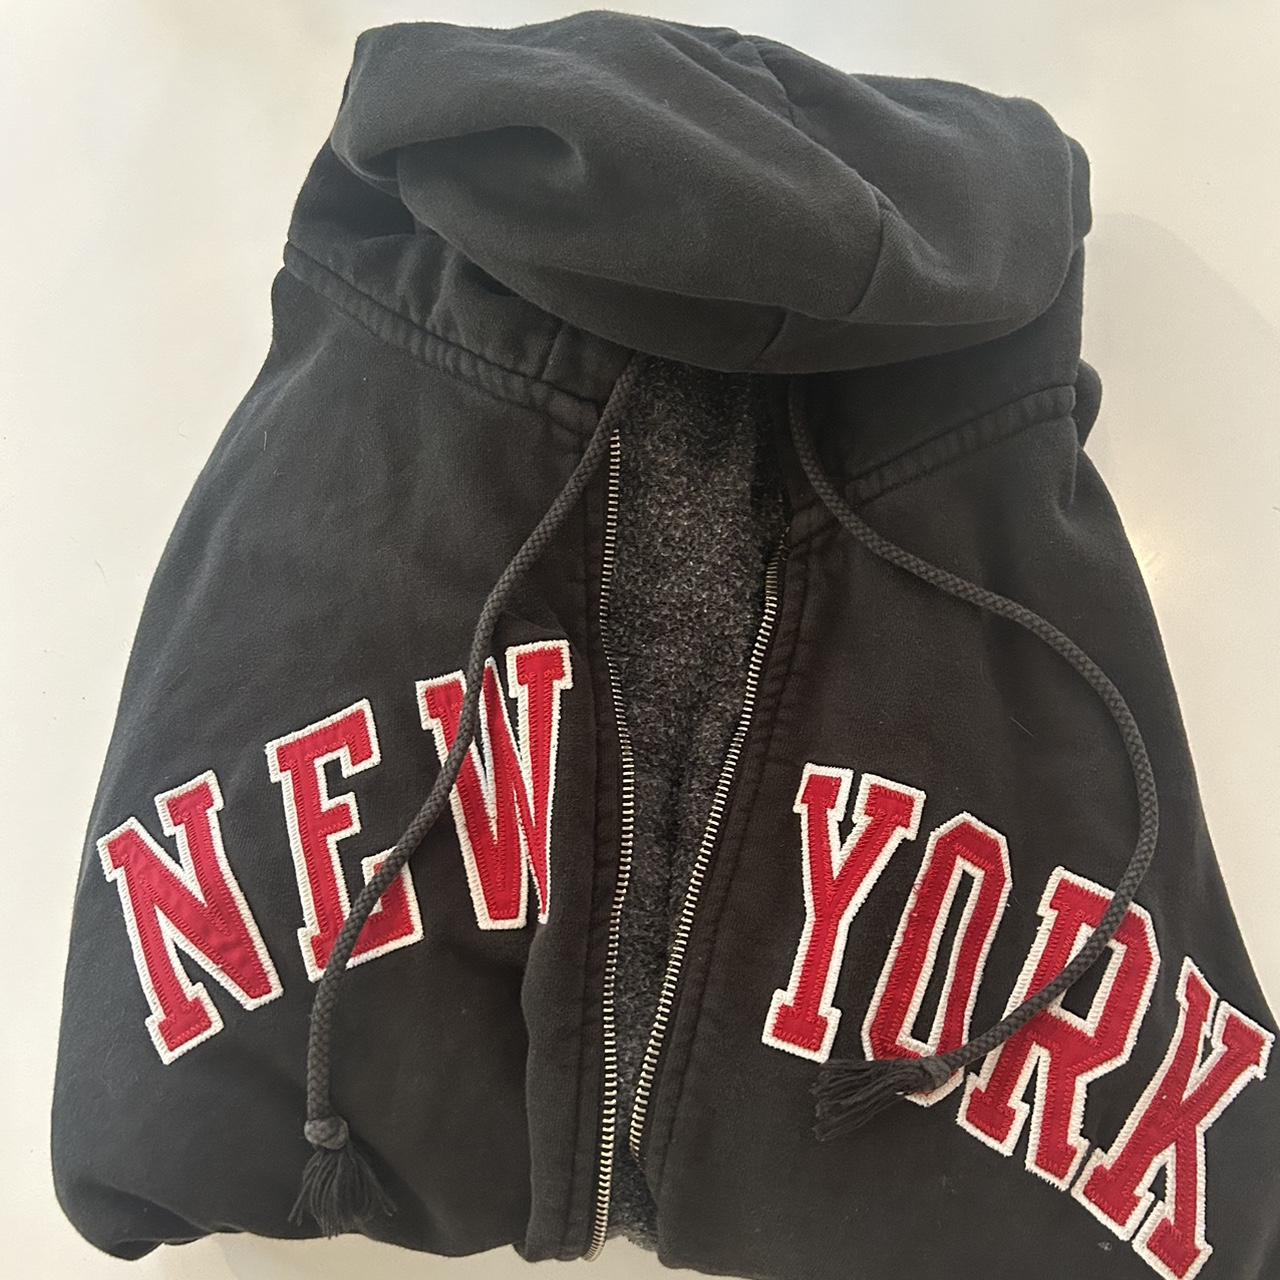 Red and black “New York” sweatshirt from Brandy - Depop